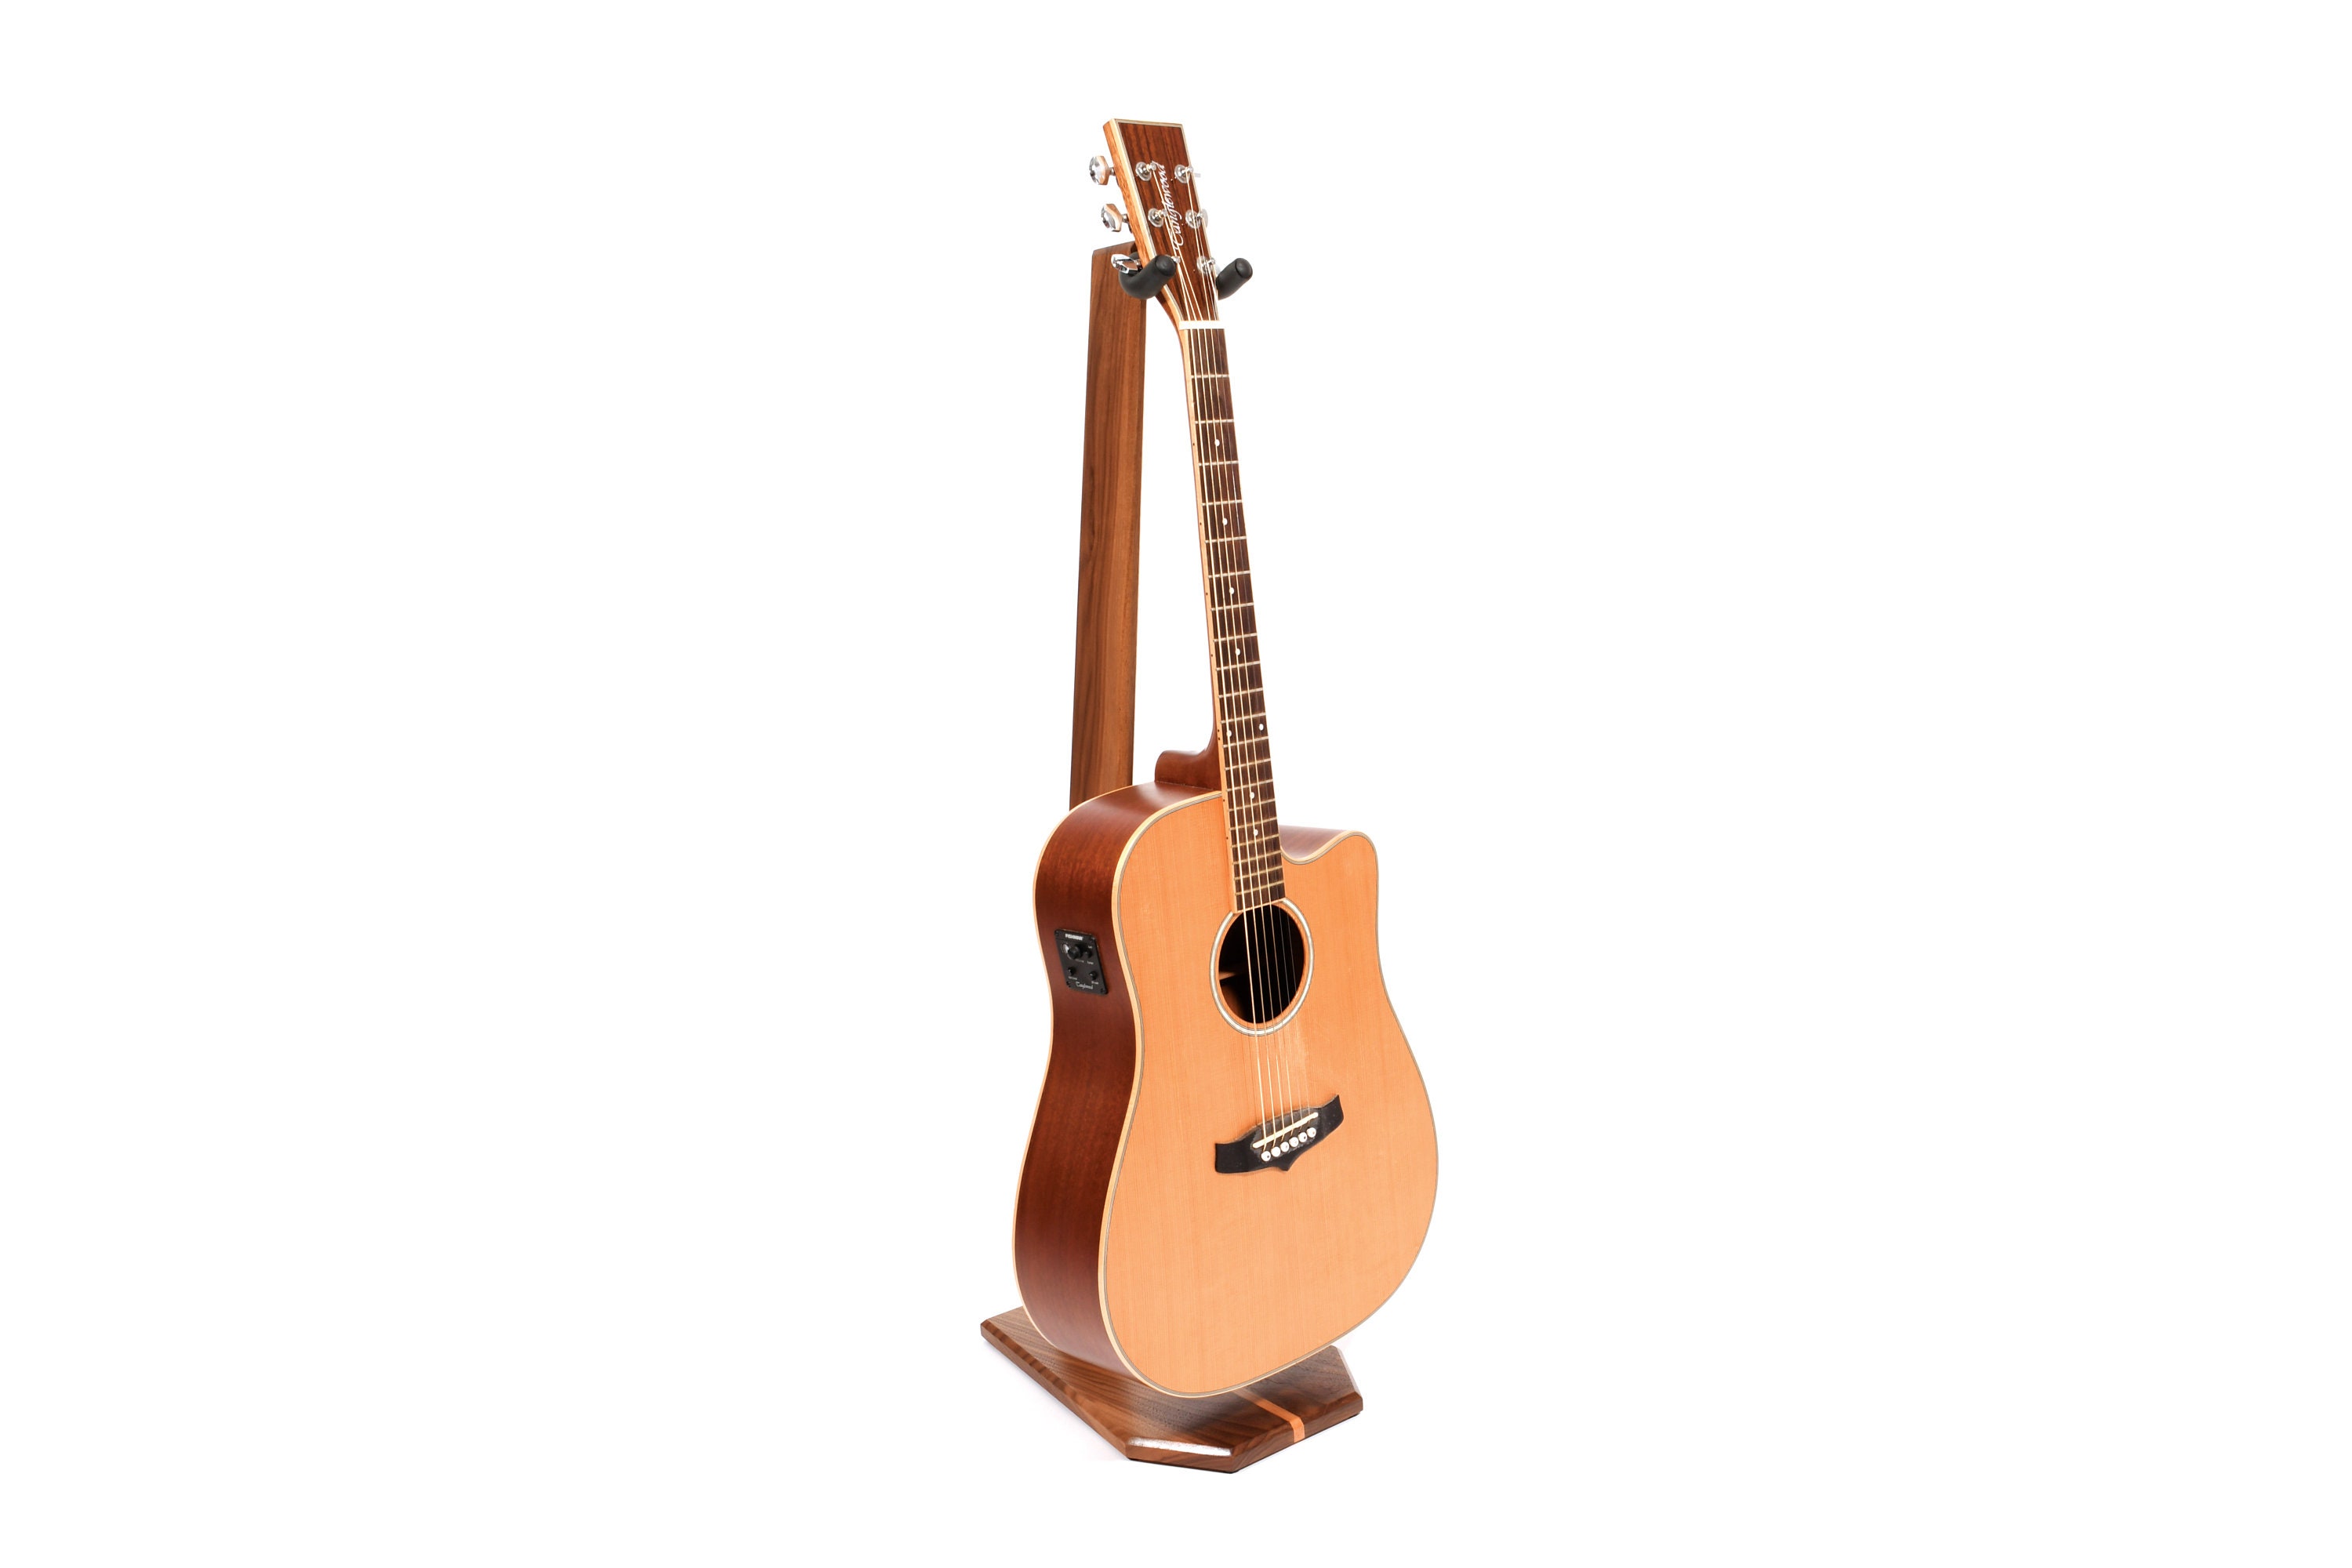 TESLYAR Soporte de pared para guitarra de madera de fresno para guitarra  eléctrica, clásica, acústica y bajo, instrumentos musicales de madera dura